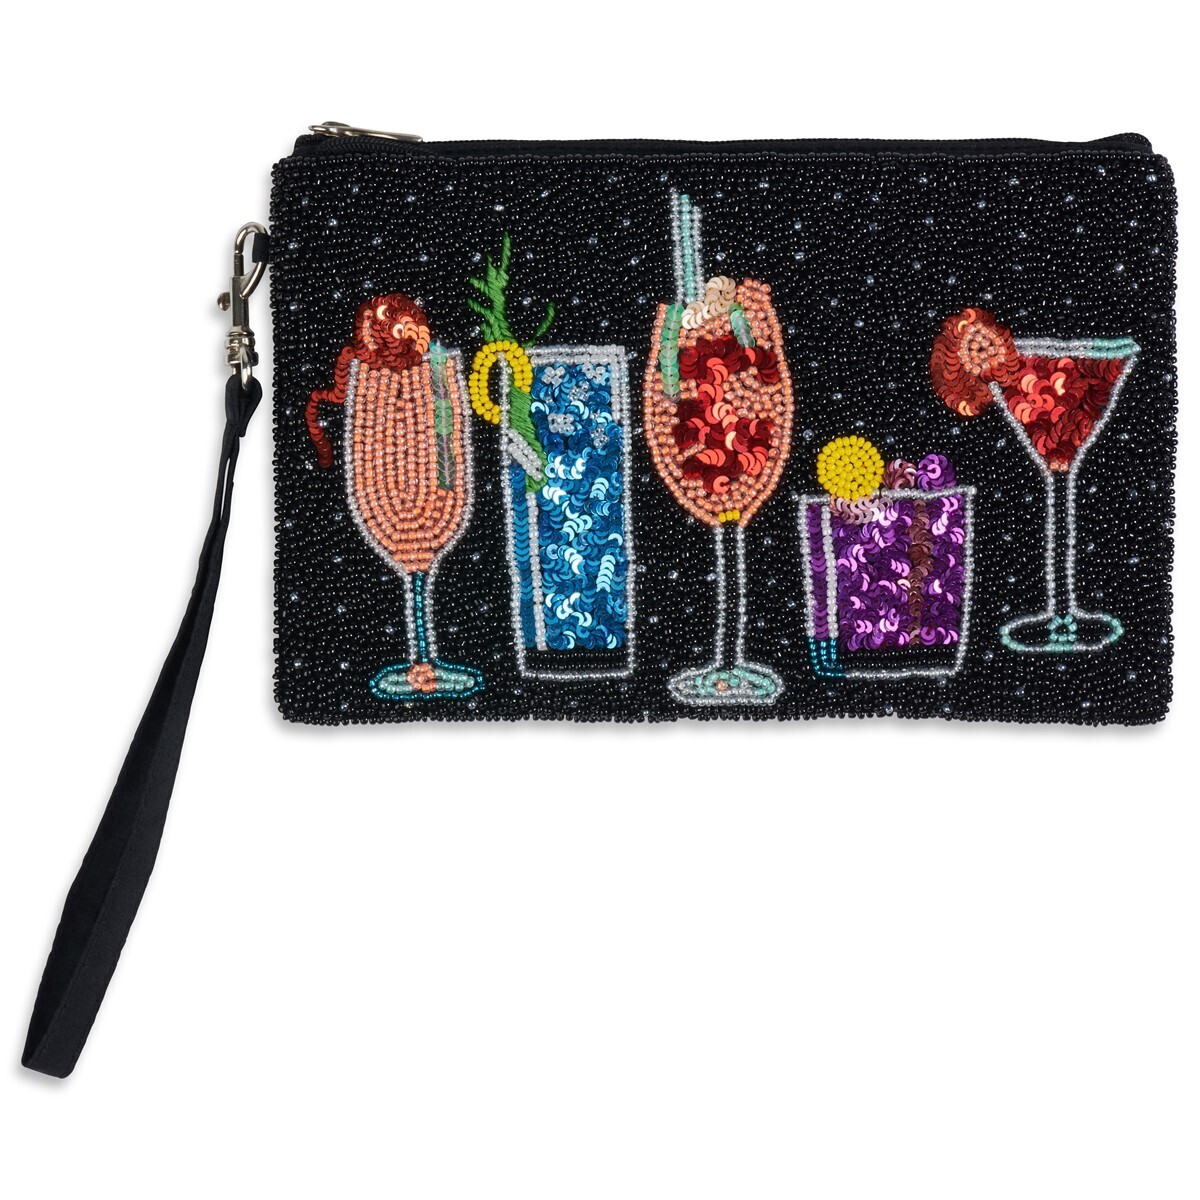 Cocktails Club Bag